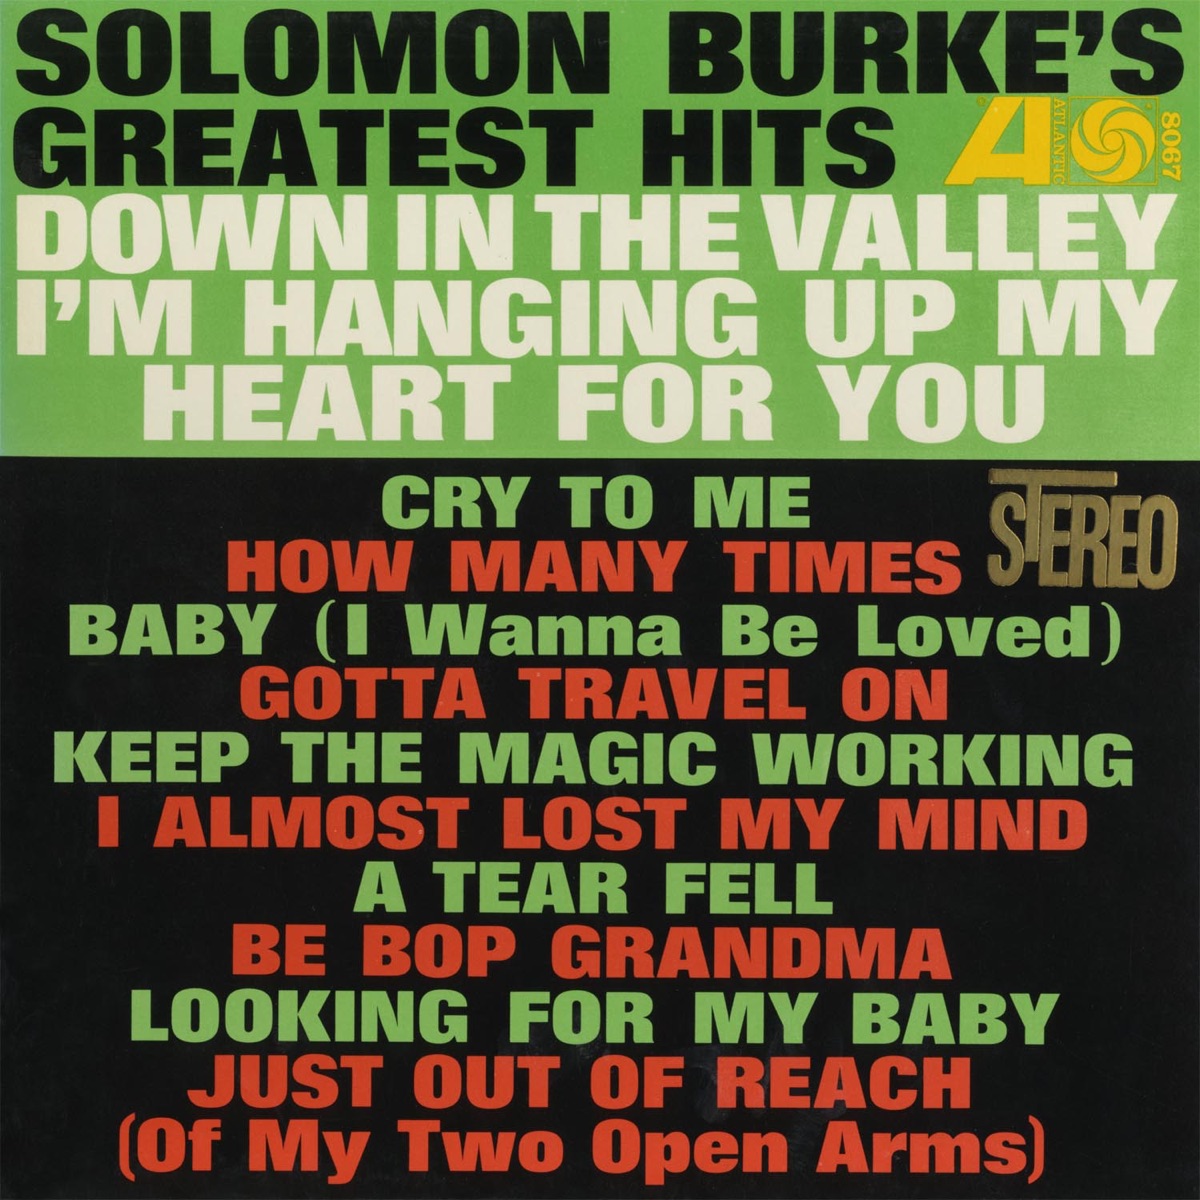 I Wish I Knew - Album by Solomon Burke - Apple Music